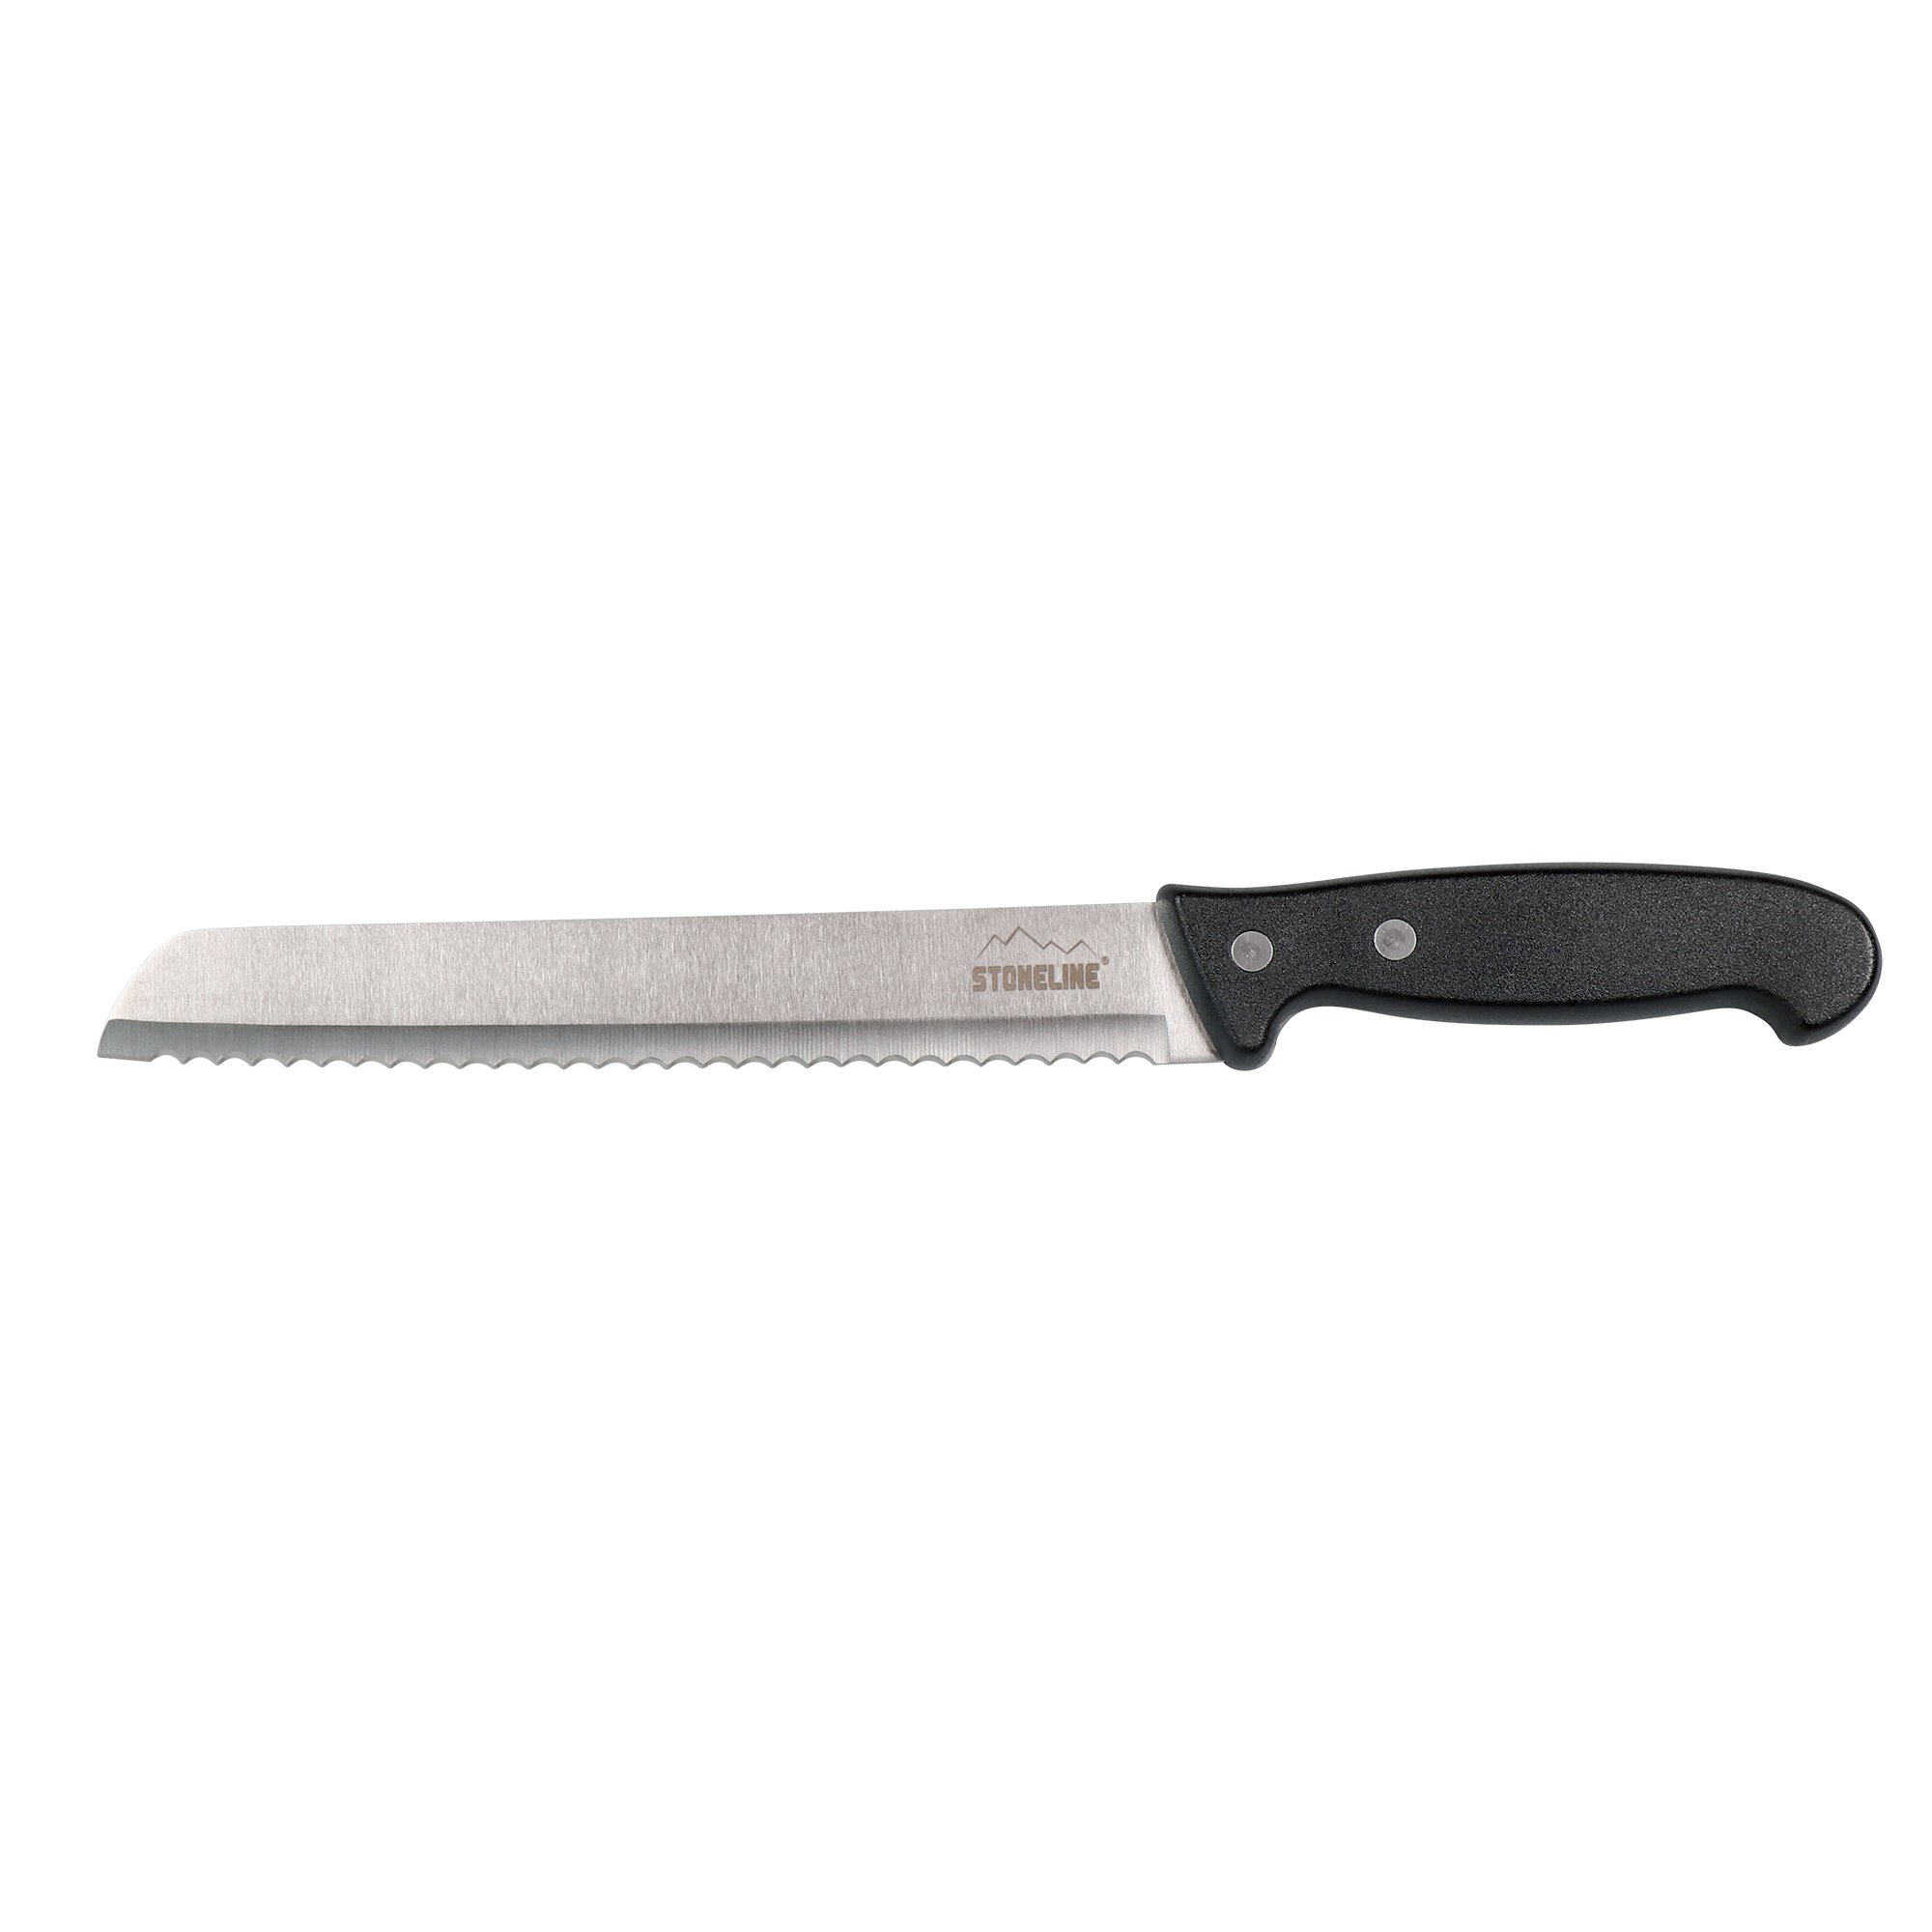 STONELINE® Stainless Steel Knife 31.5 cm Bread Knife, Safety Sheath